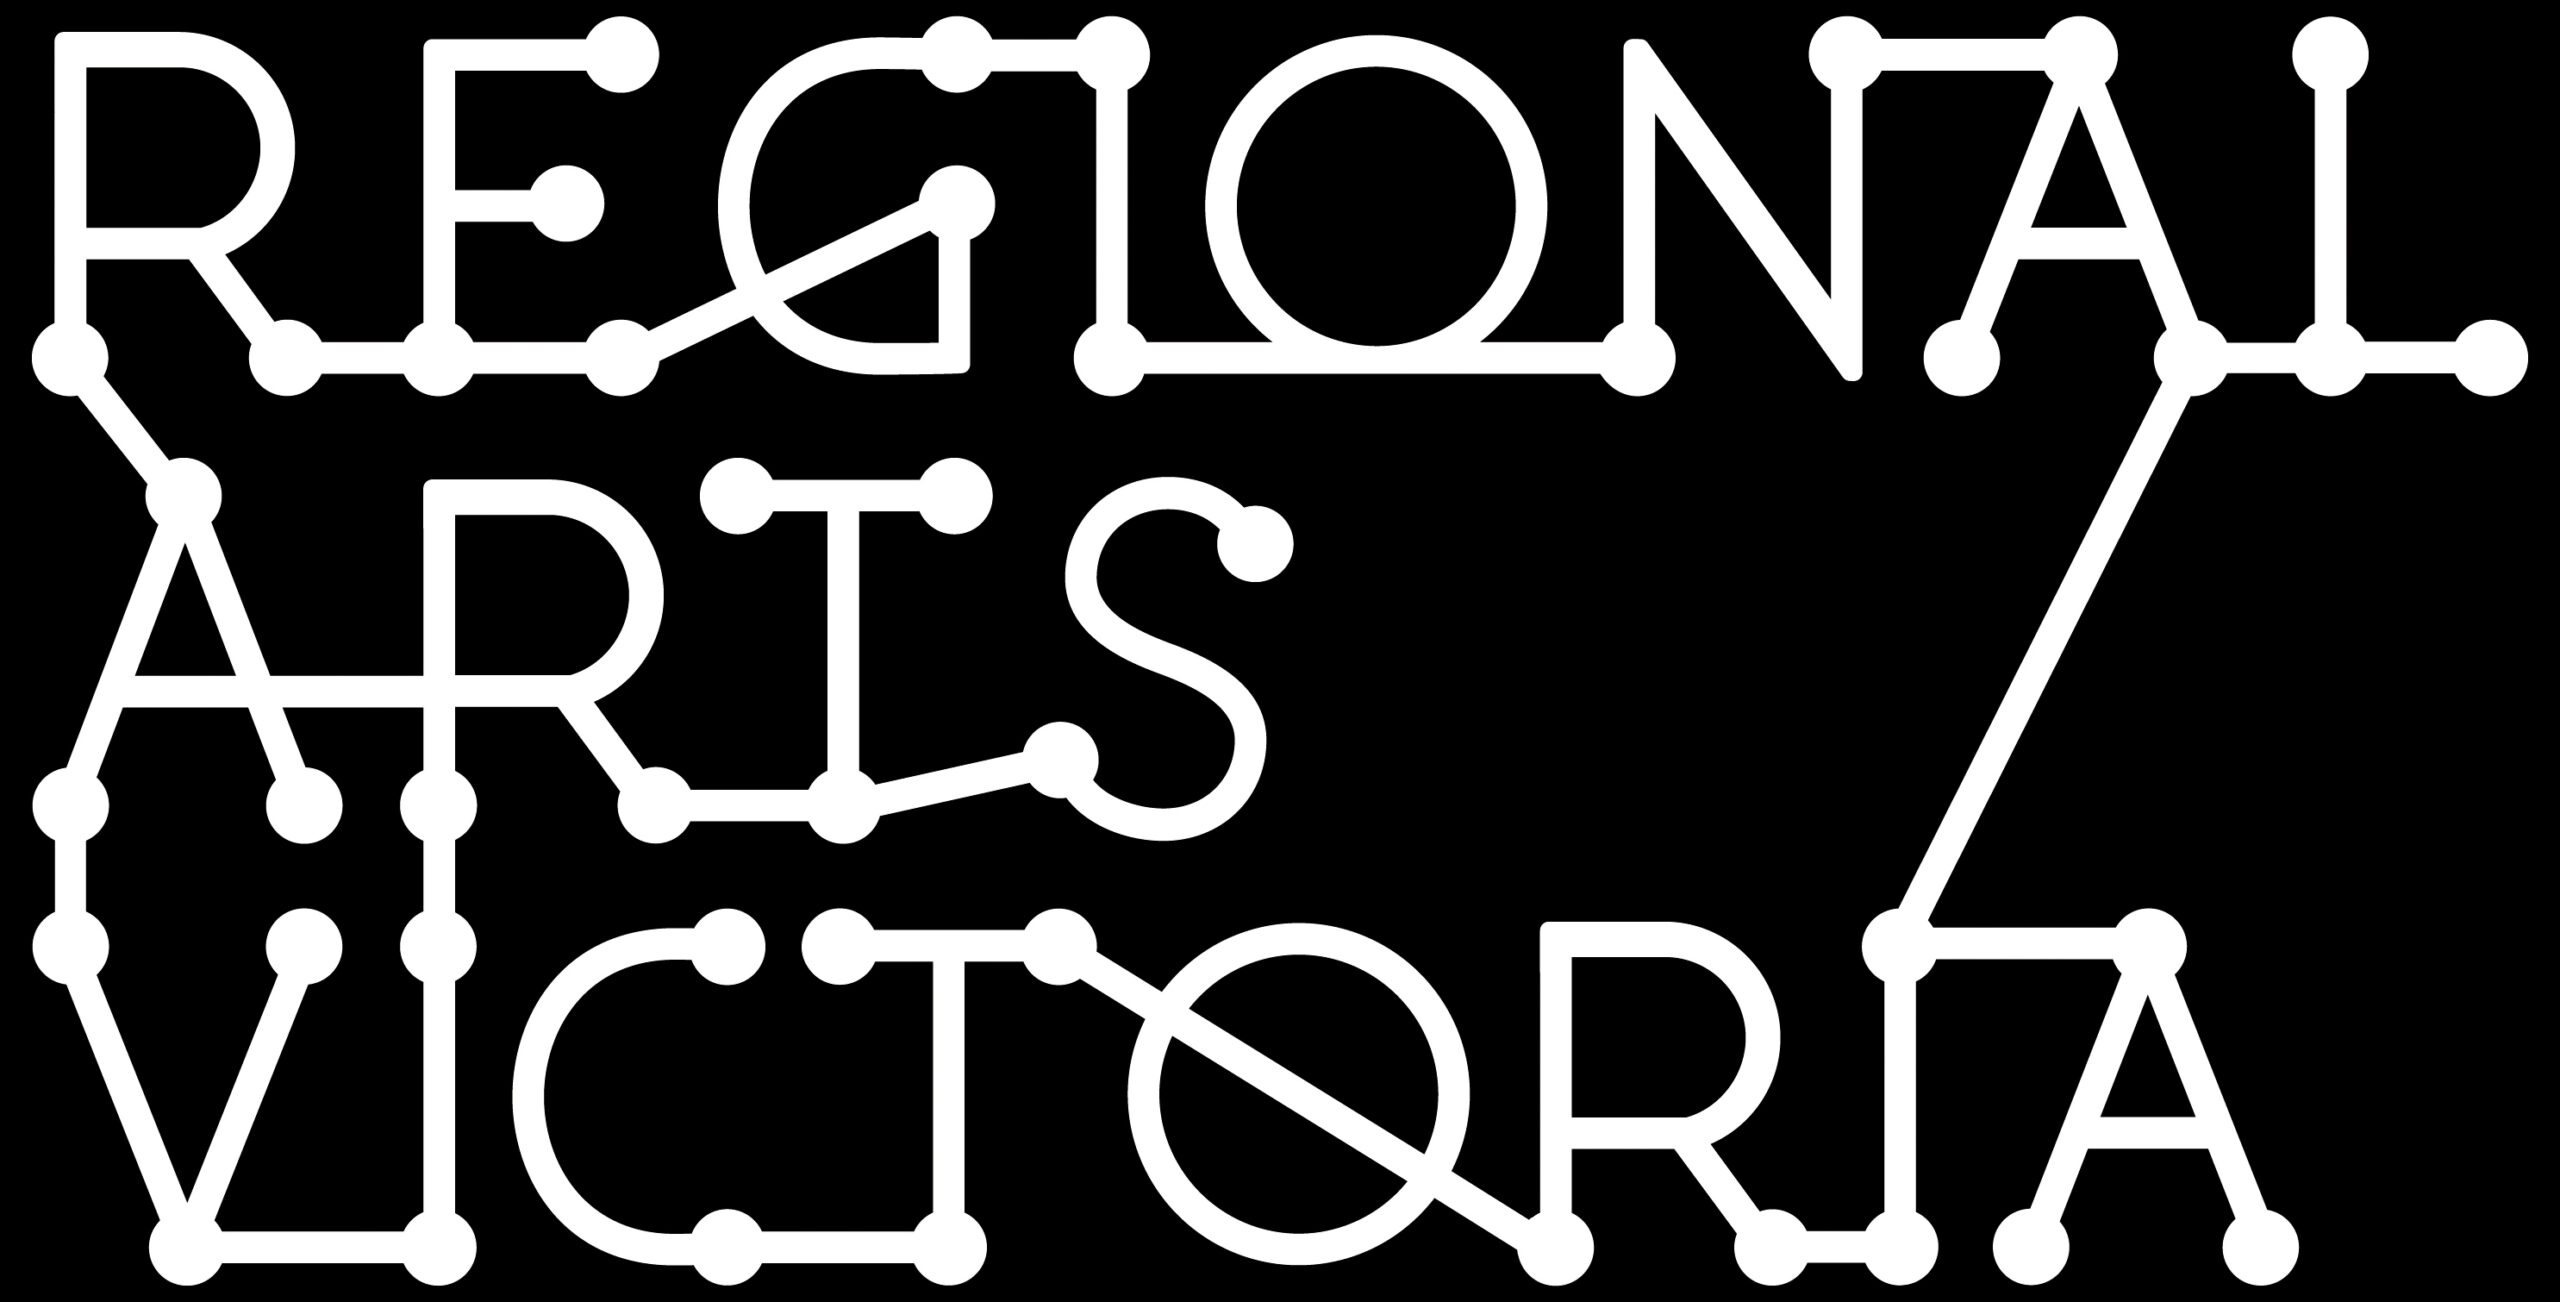 Regional ARts Victoria logo negative RGB